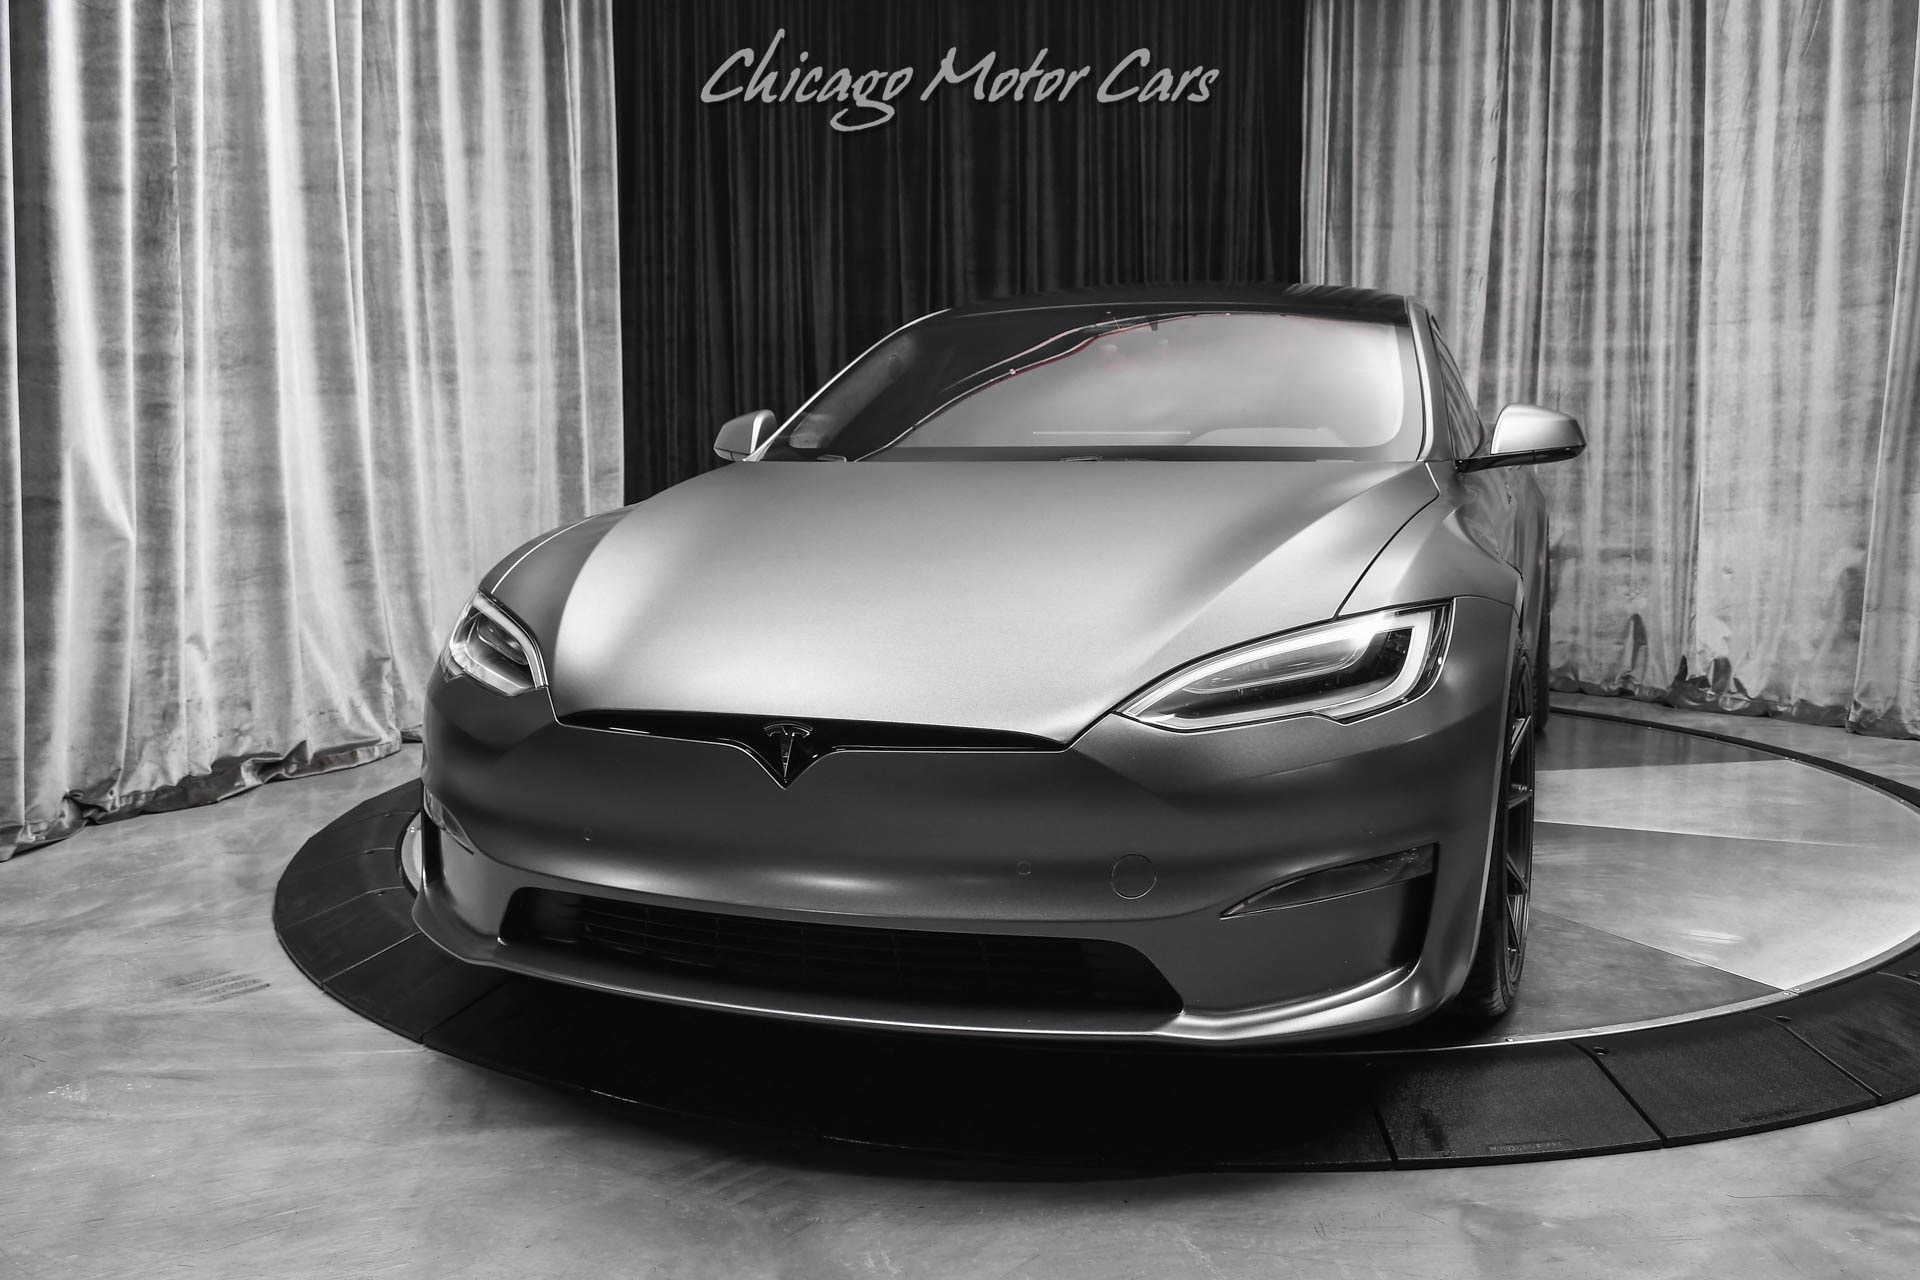 https://www.chicagomotorcars.com/imagetag/10305/2/l/Used-2021-Tesla-Model-S-Plaid-Sedan-Autopilot-Matte-Gray-Wrap-Vossen-Hybrid-Forged-Wheels.jpg